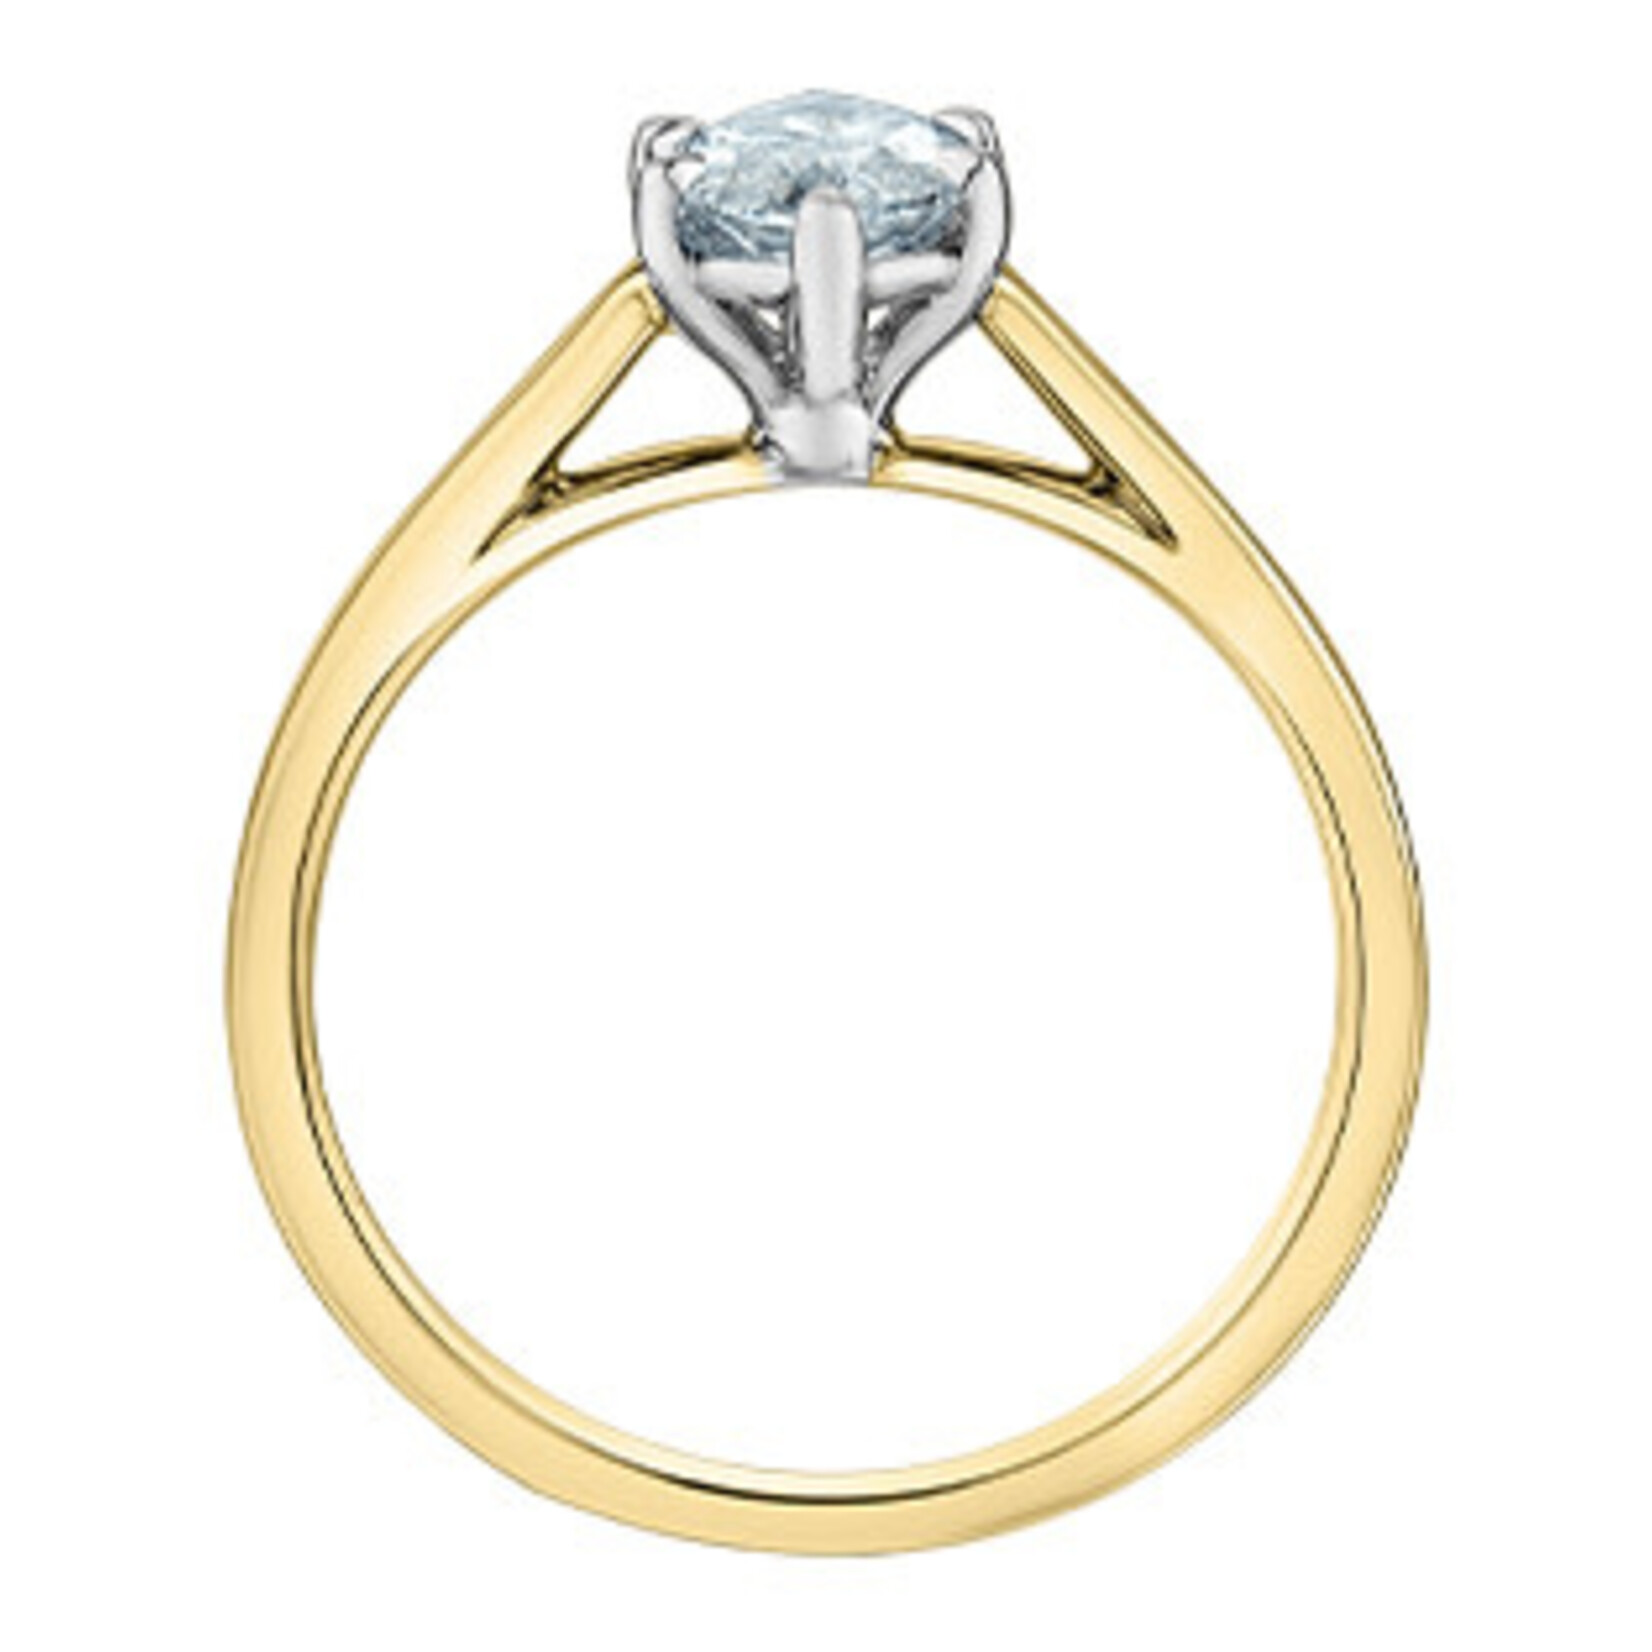 14K YG/WG 1 RD#LGD016070 Marq. Shape 1.09CT Diamond Ring